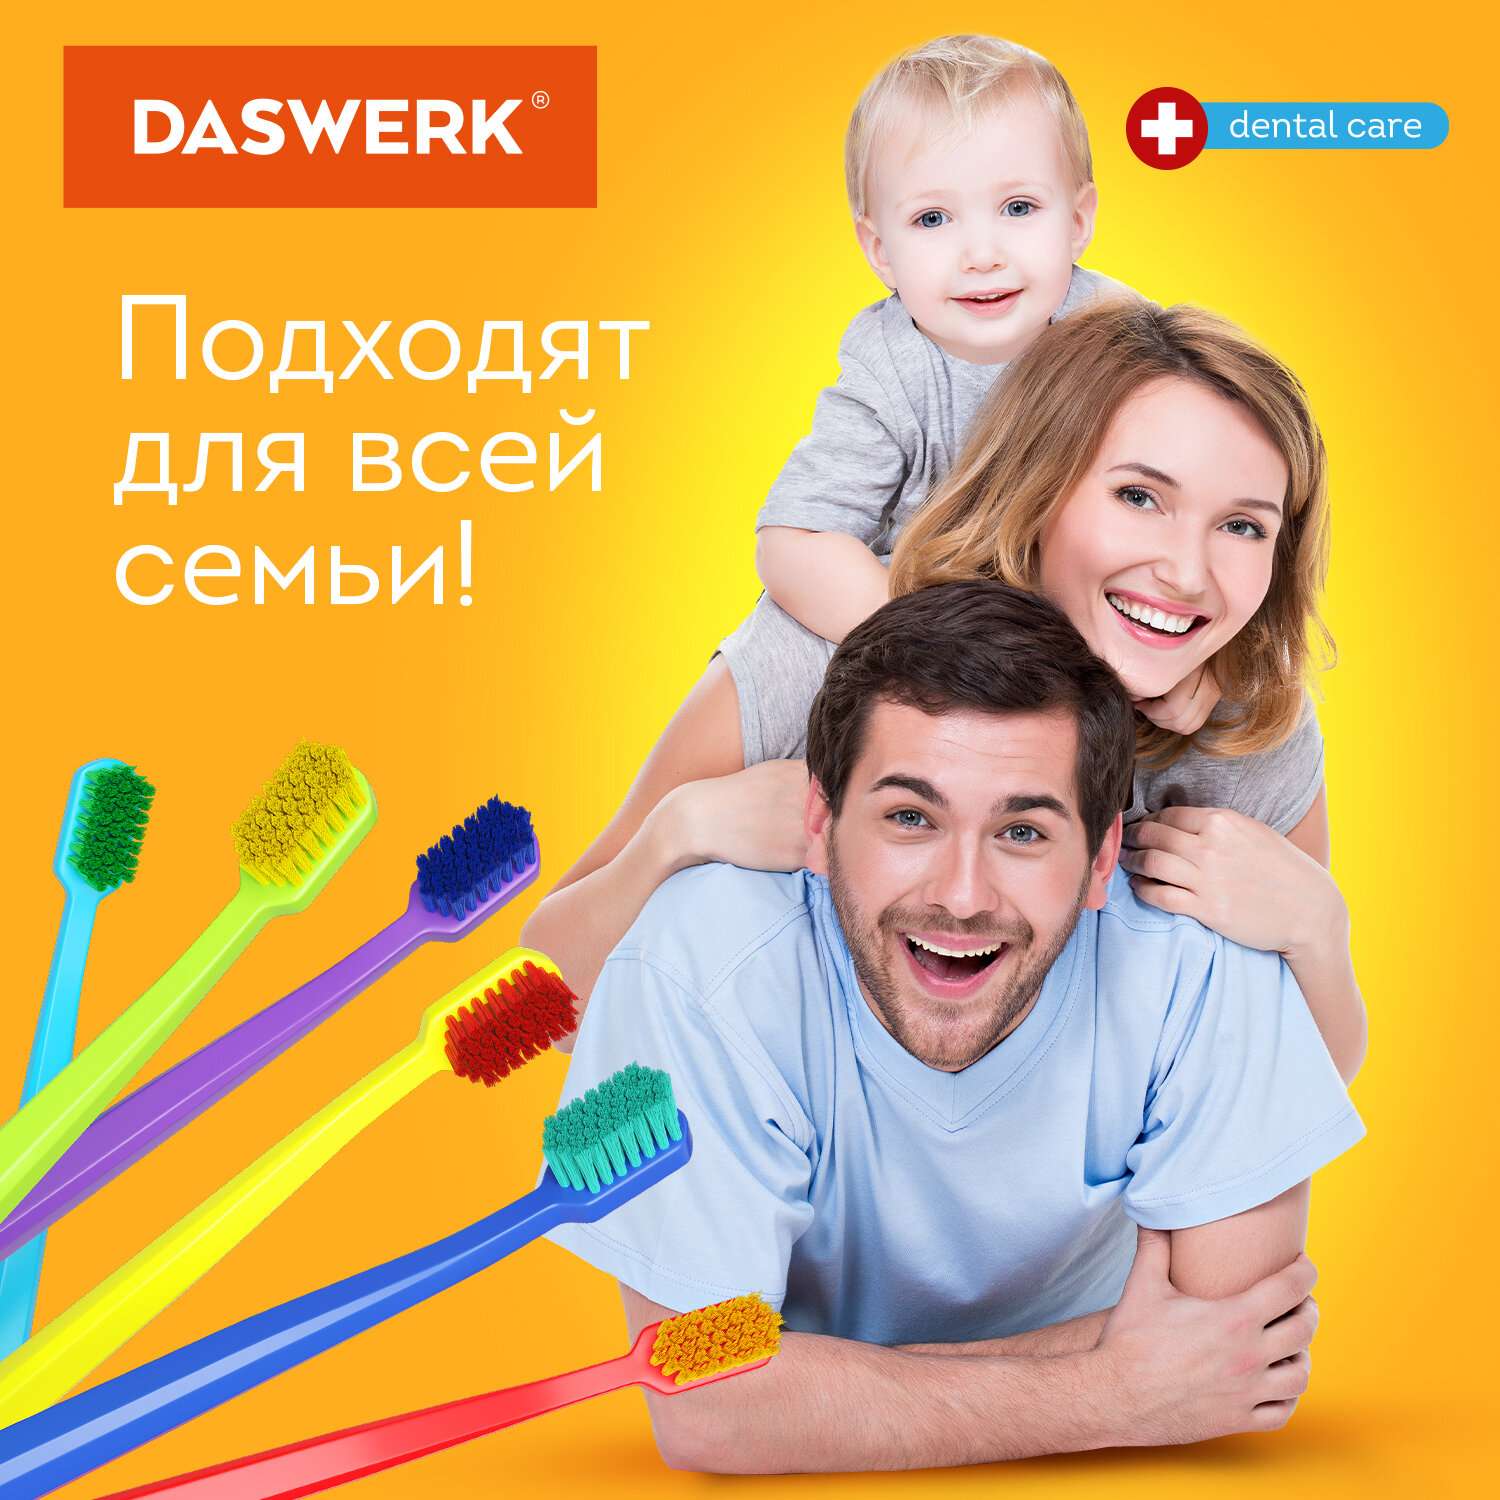 Зубная щетка DASWERK мягкая/средней жесткости для зубов набор 6 штук - фото 5